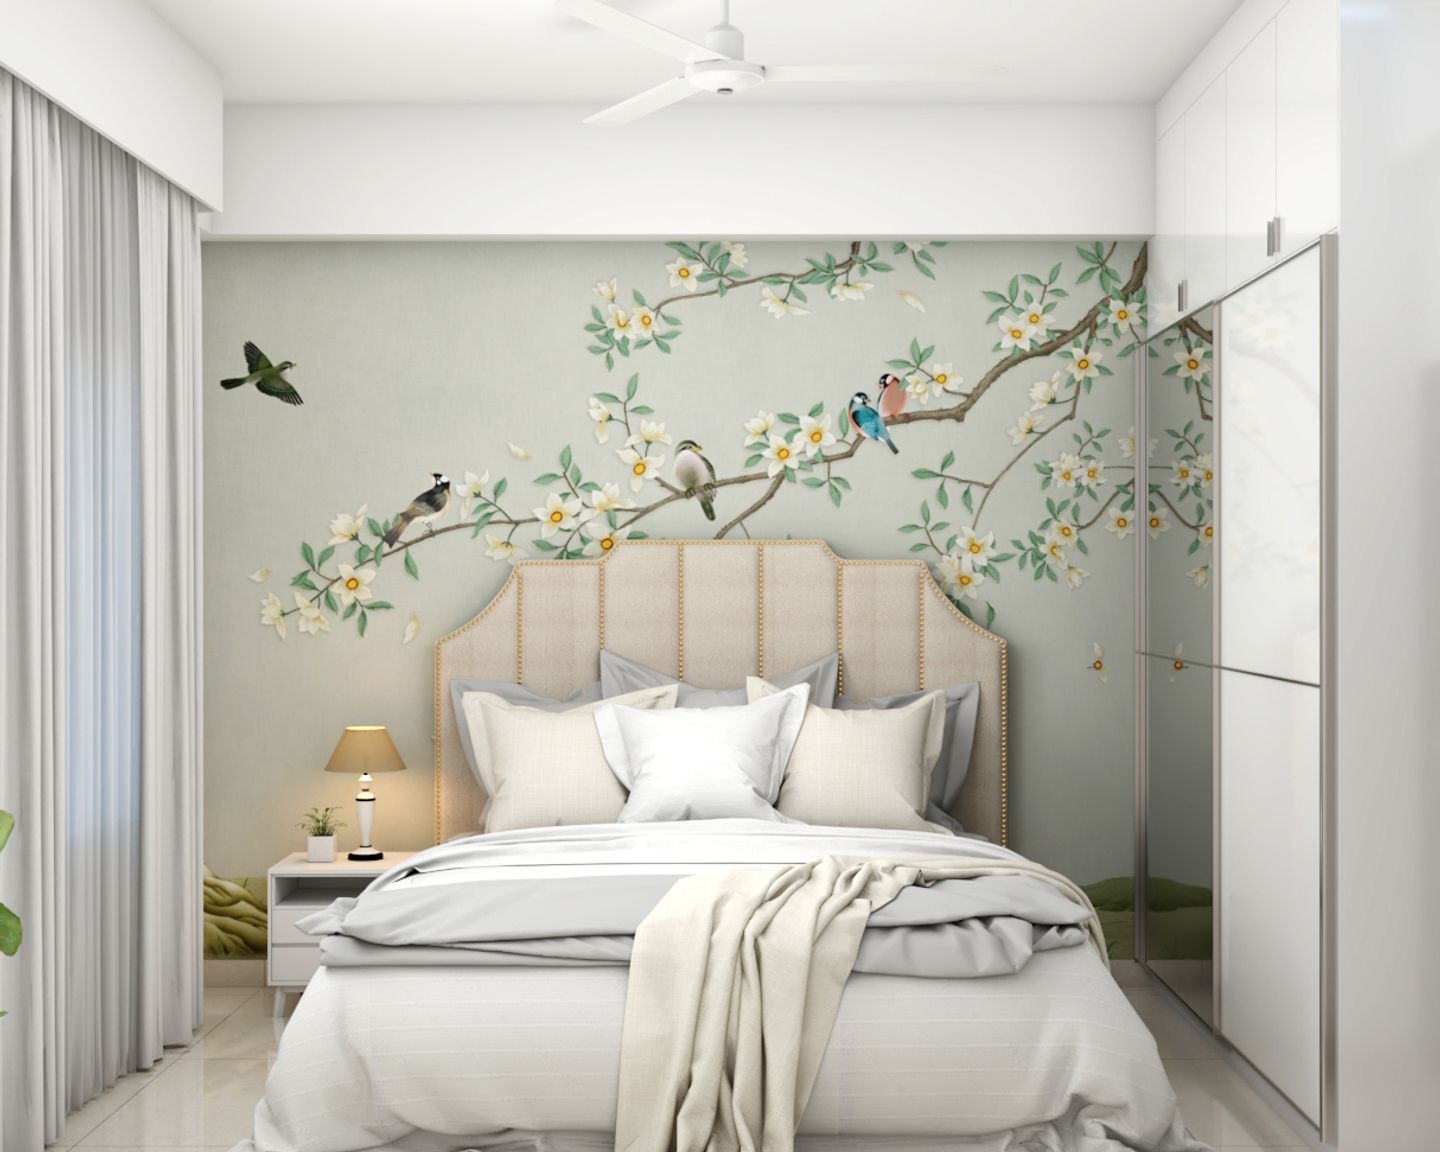 Compact Kids Bedroom With Wallpaper - Livspace